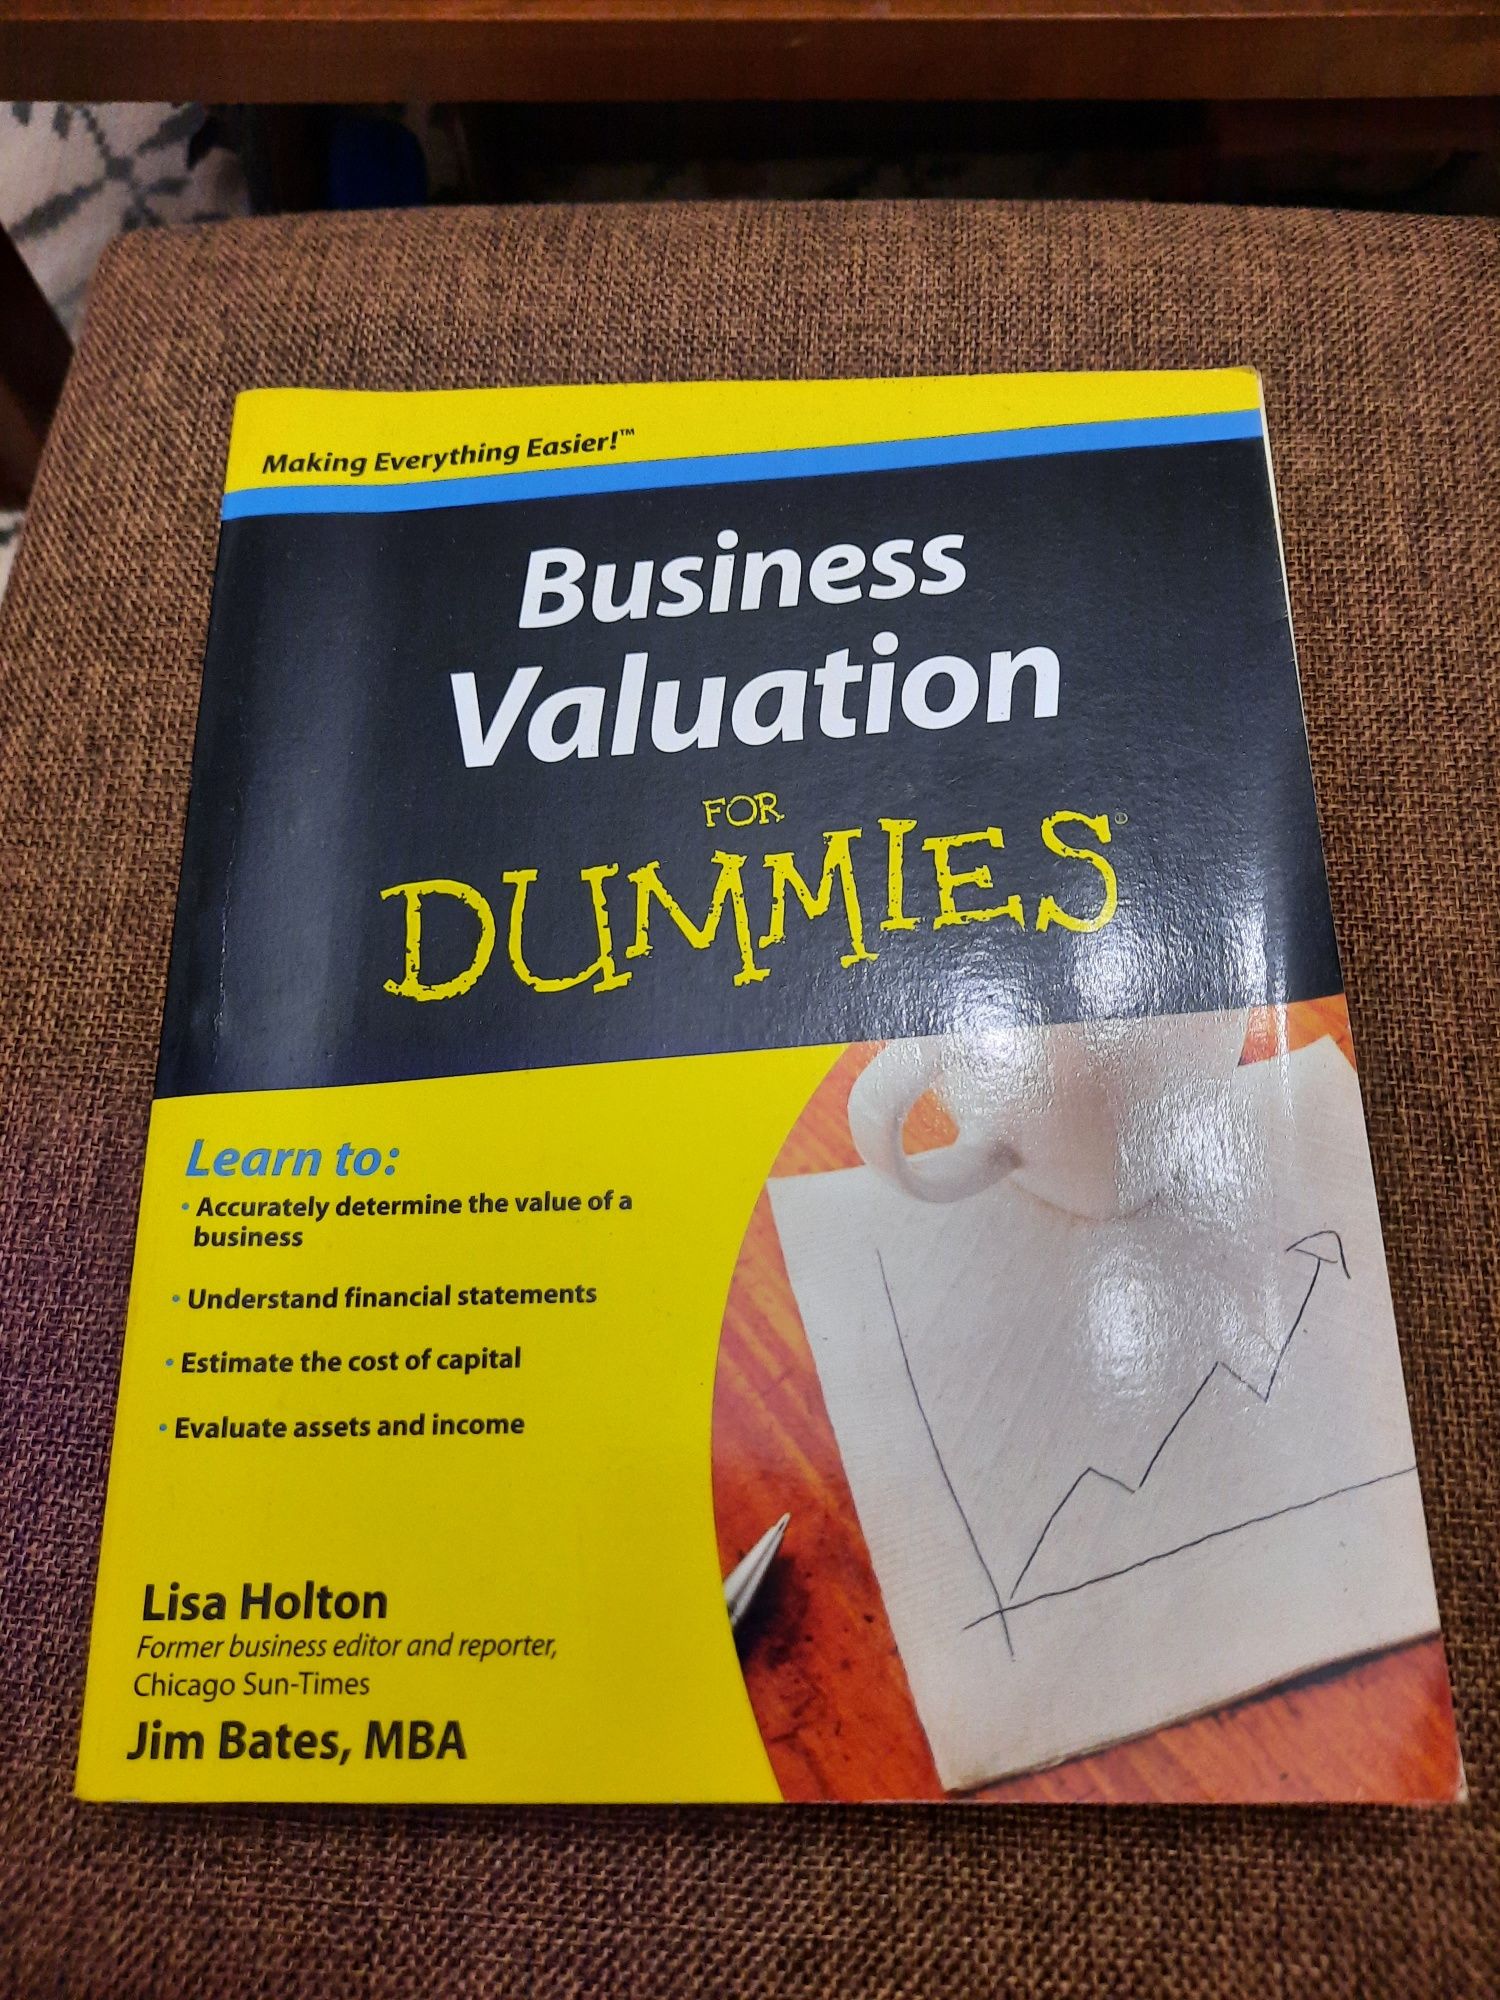 Livro "business valuation for dummies"